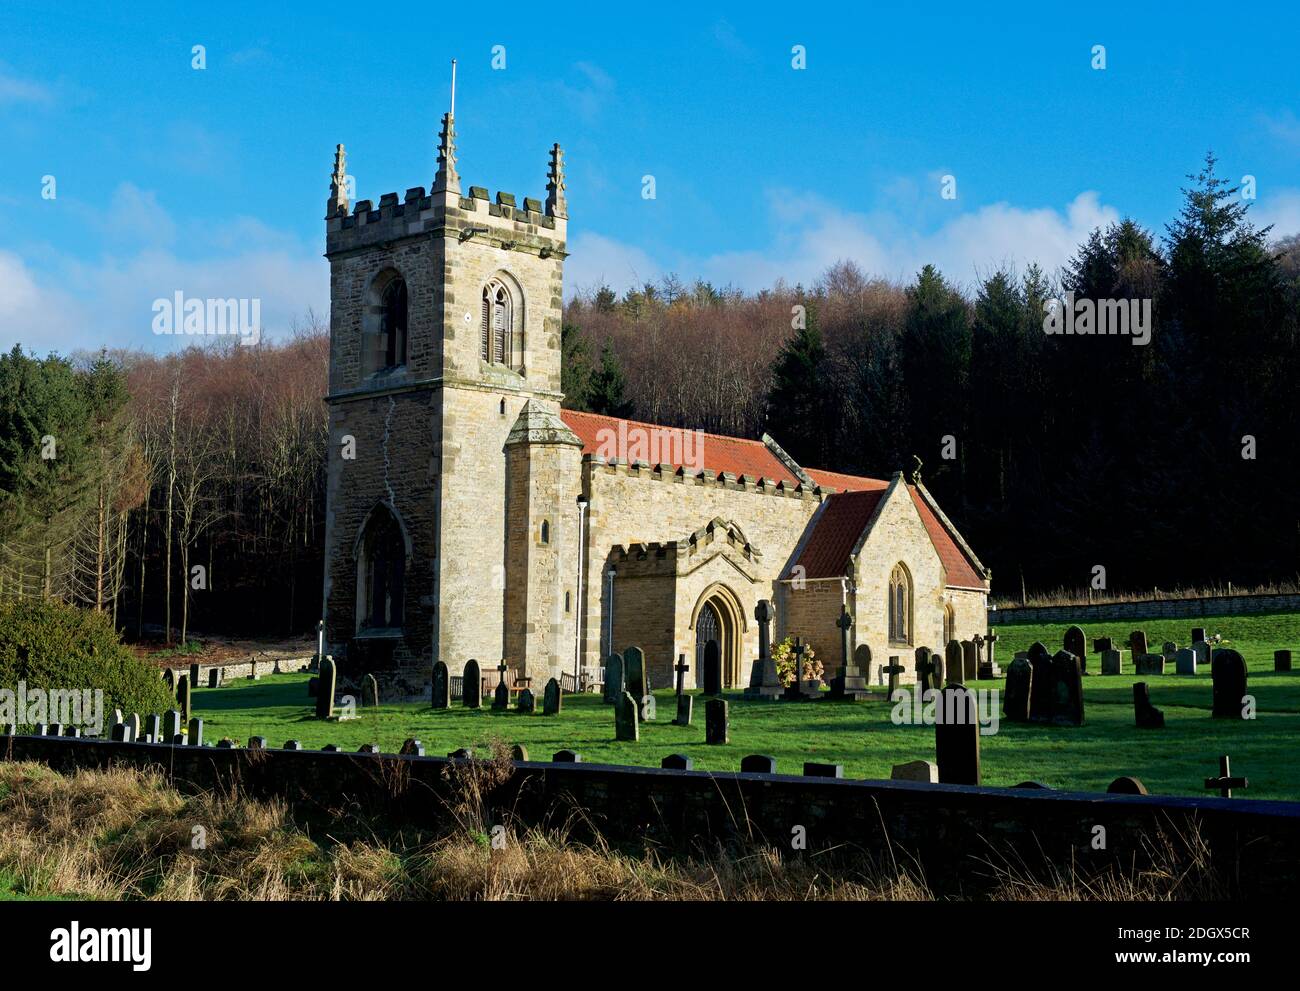 All Saints Church, Brantingham, East Yorkshire, Inghilterra Regno Unito Foto Stock